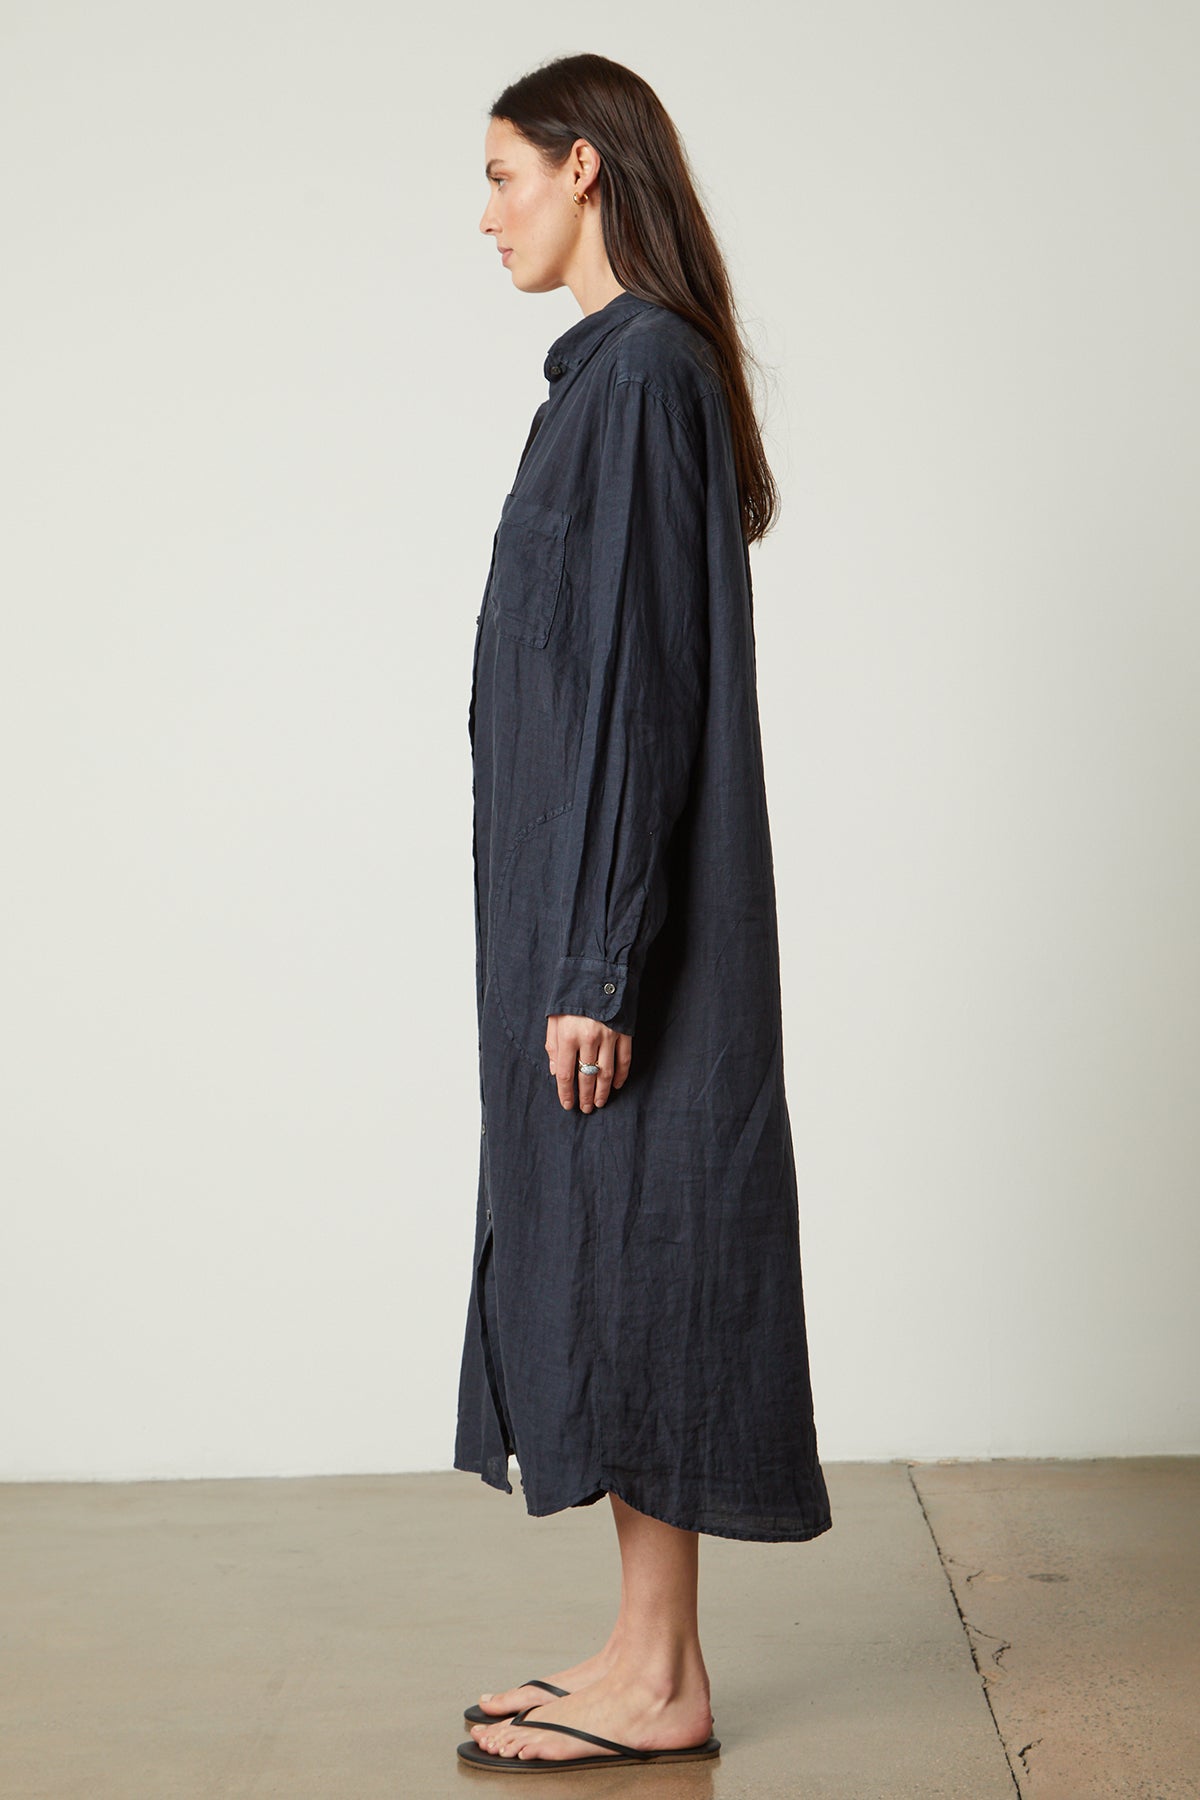 The model is wearing a JORA LINEN BUTTON-UP DRESS dress by Velvet by Graham & Spencer.-26143085658305